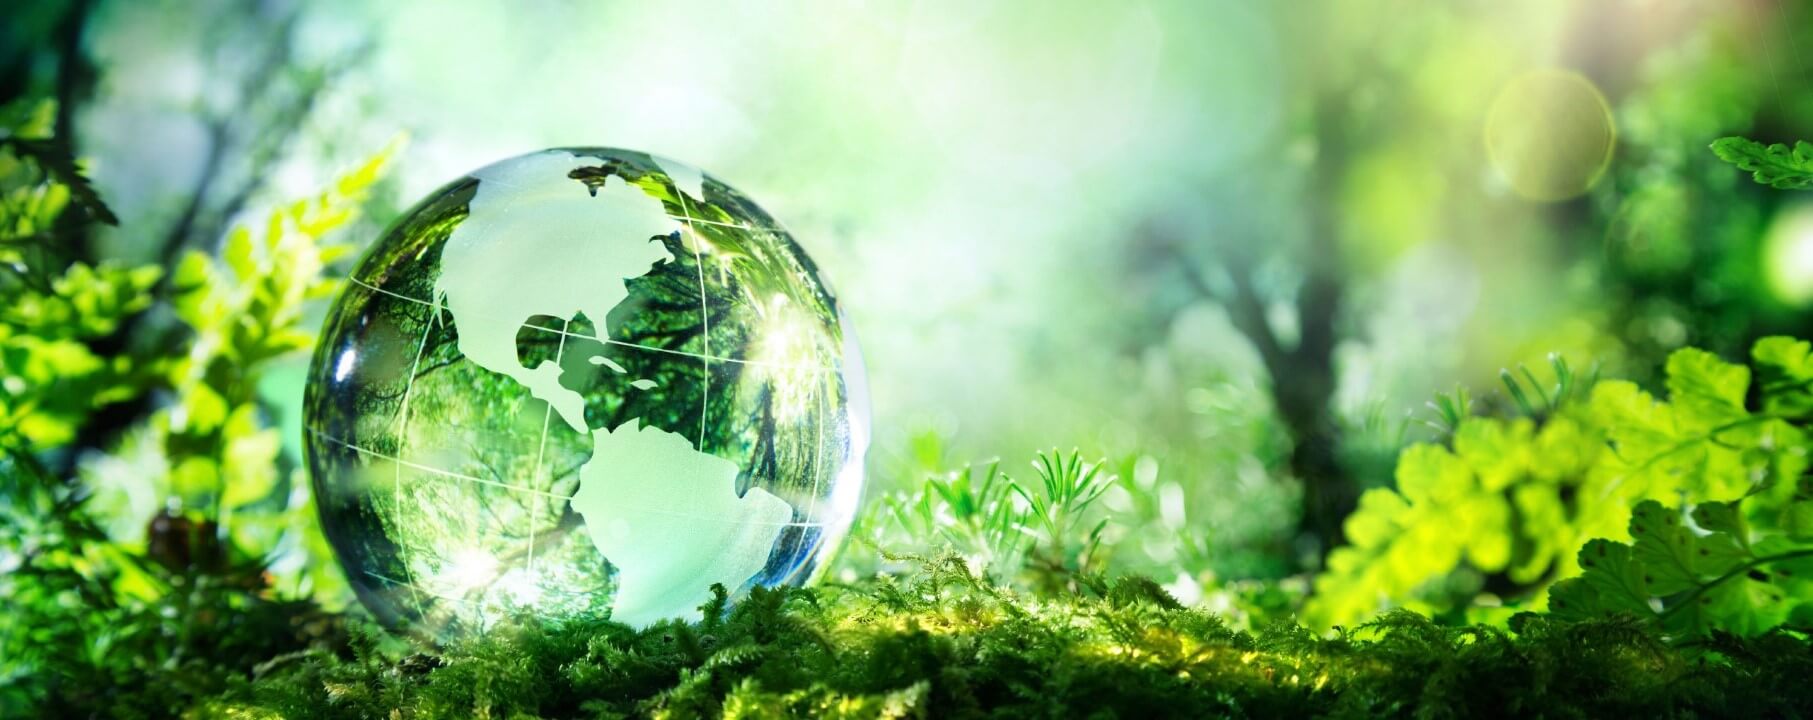 Miljöbild av glob i grön natur